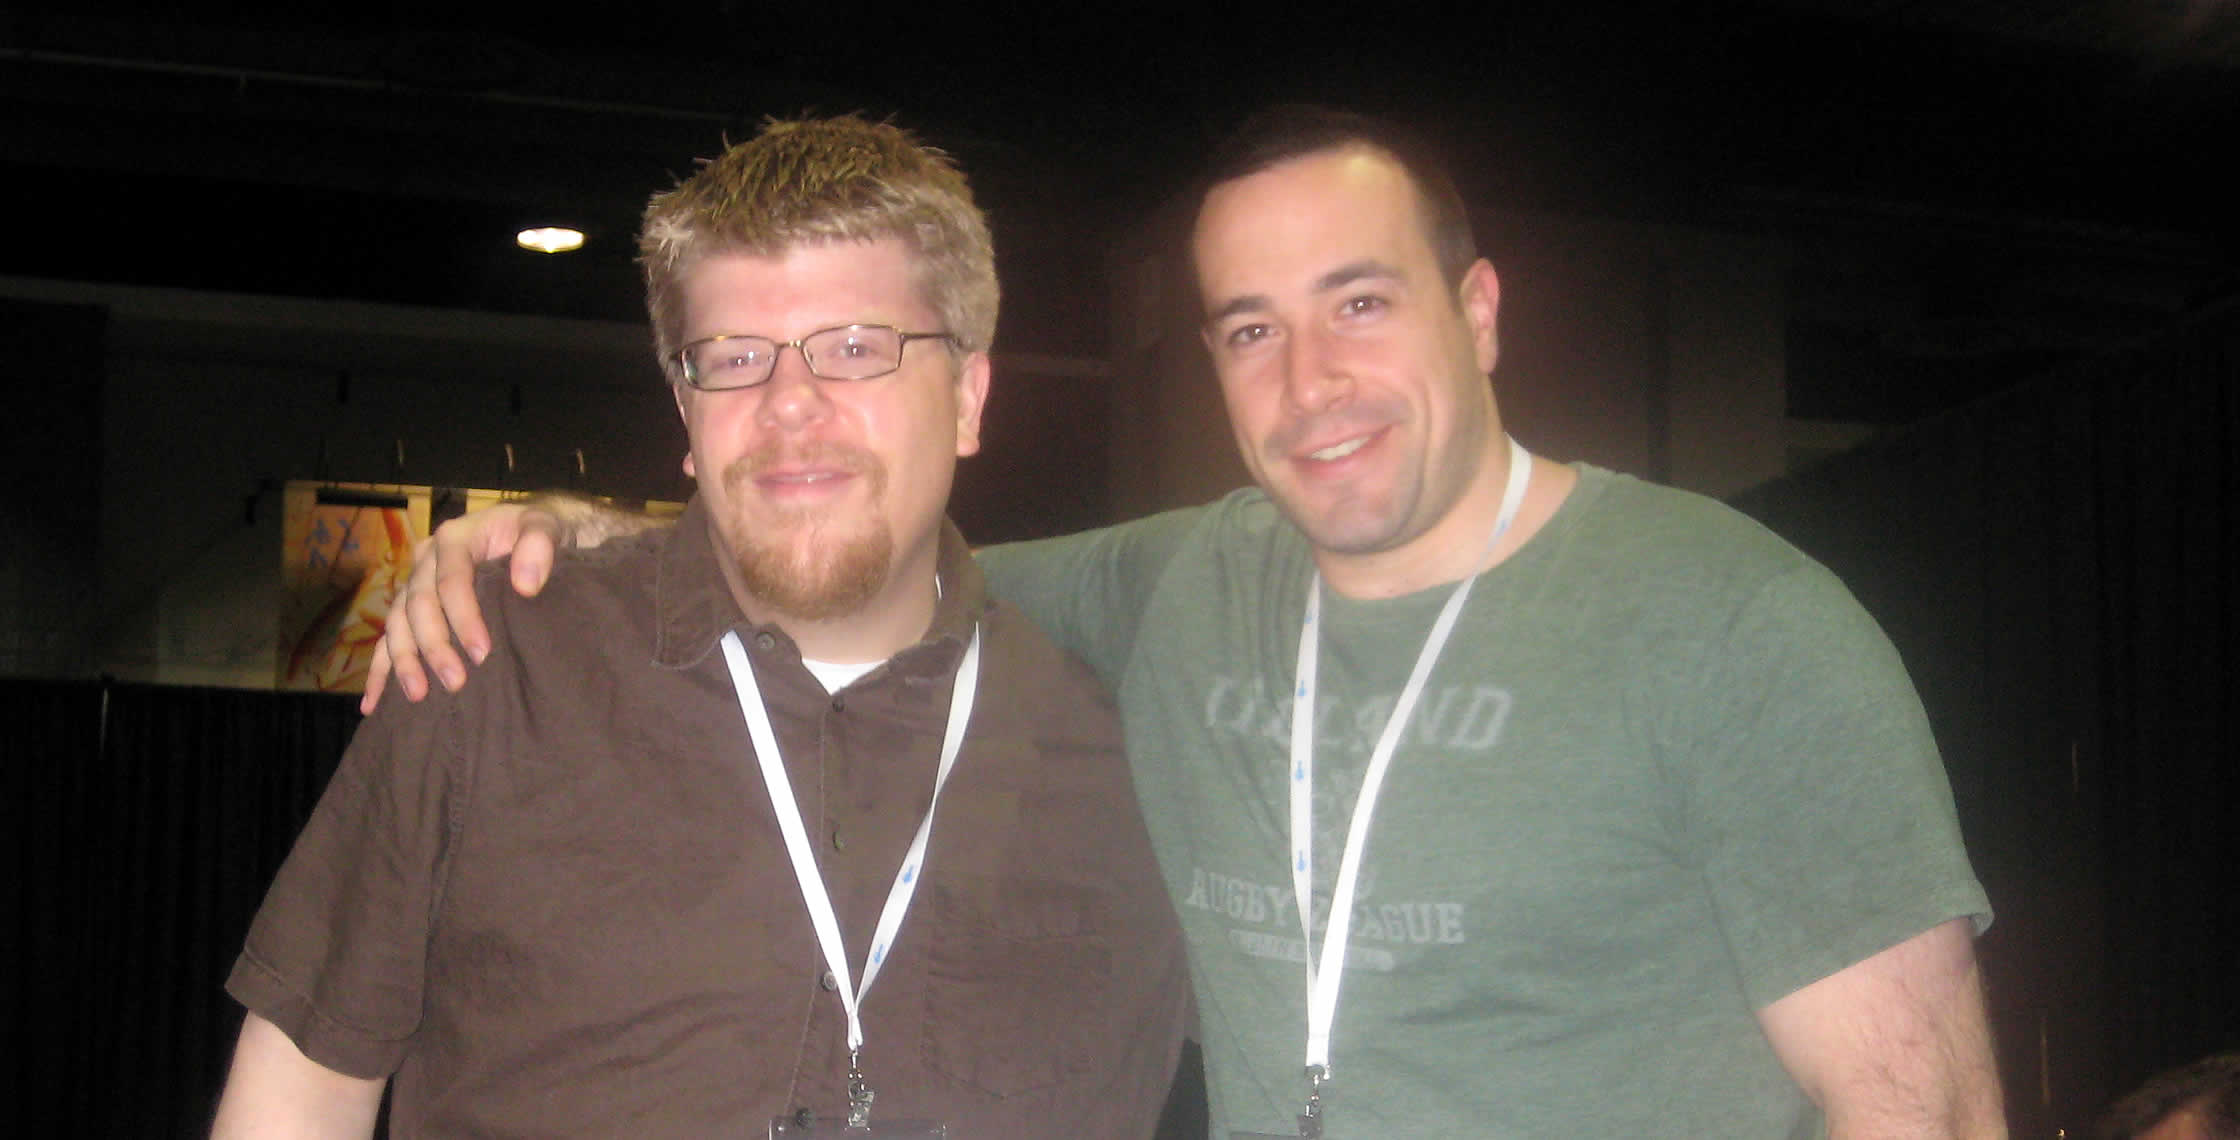 Ben Nadel at CFUNITED 2008 (Washington, D.C.) with: Matt Woodward